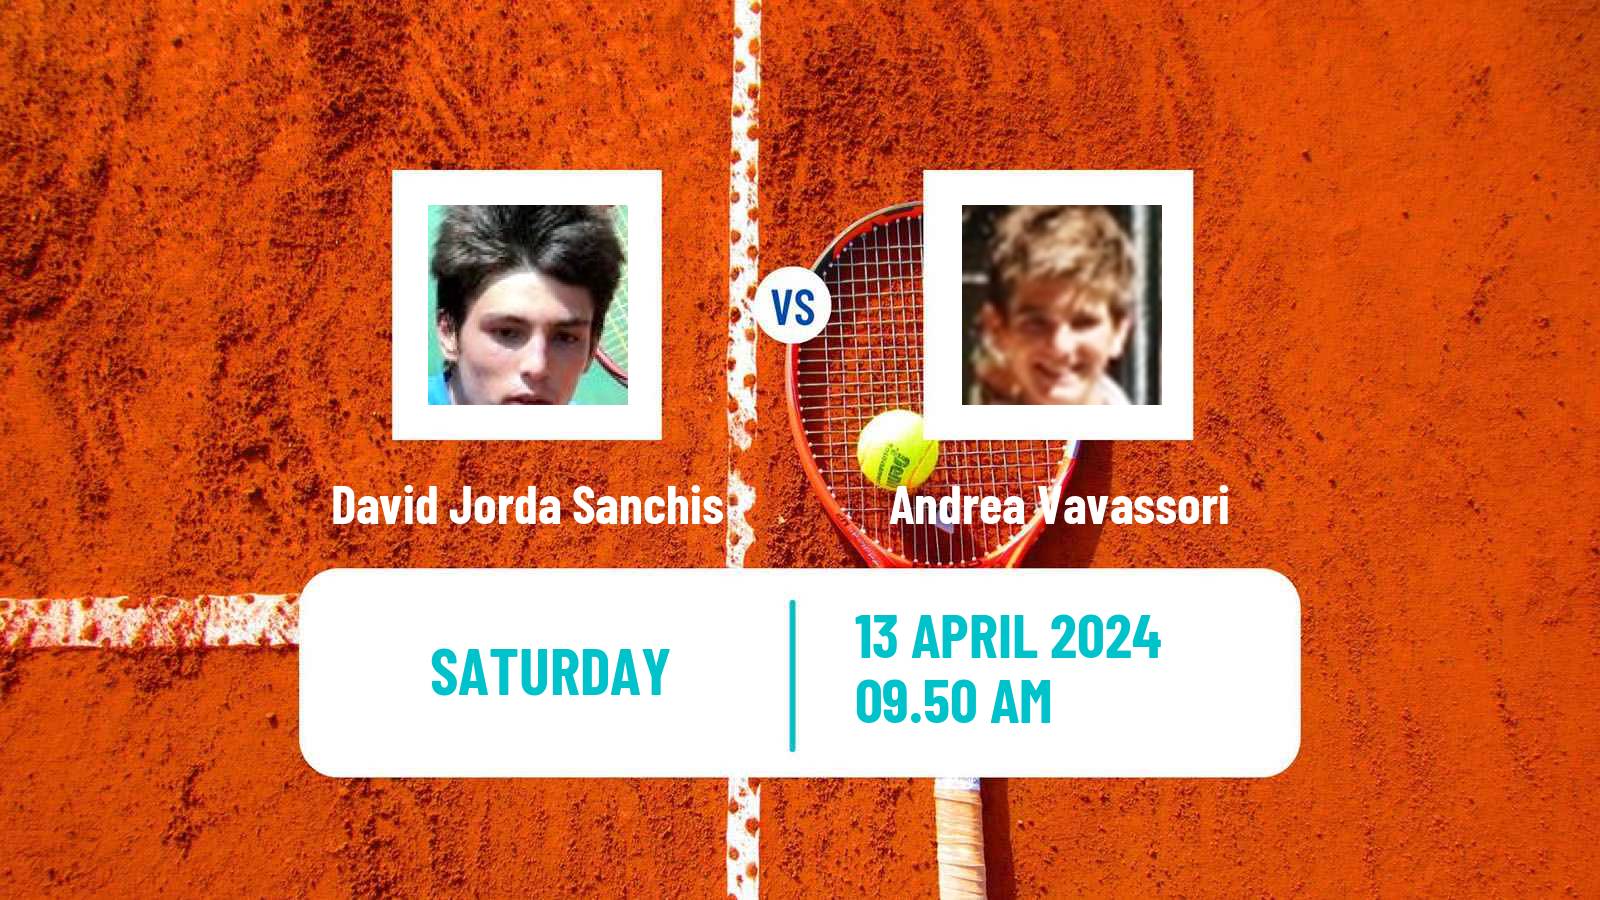 Tennis ATP Barcelona David Jorda Sanchis - Andrea Vavassori